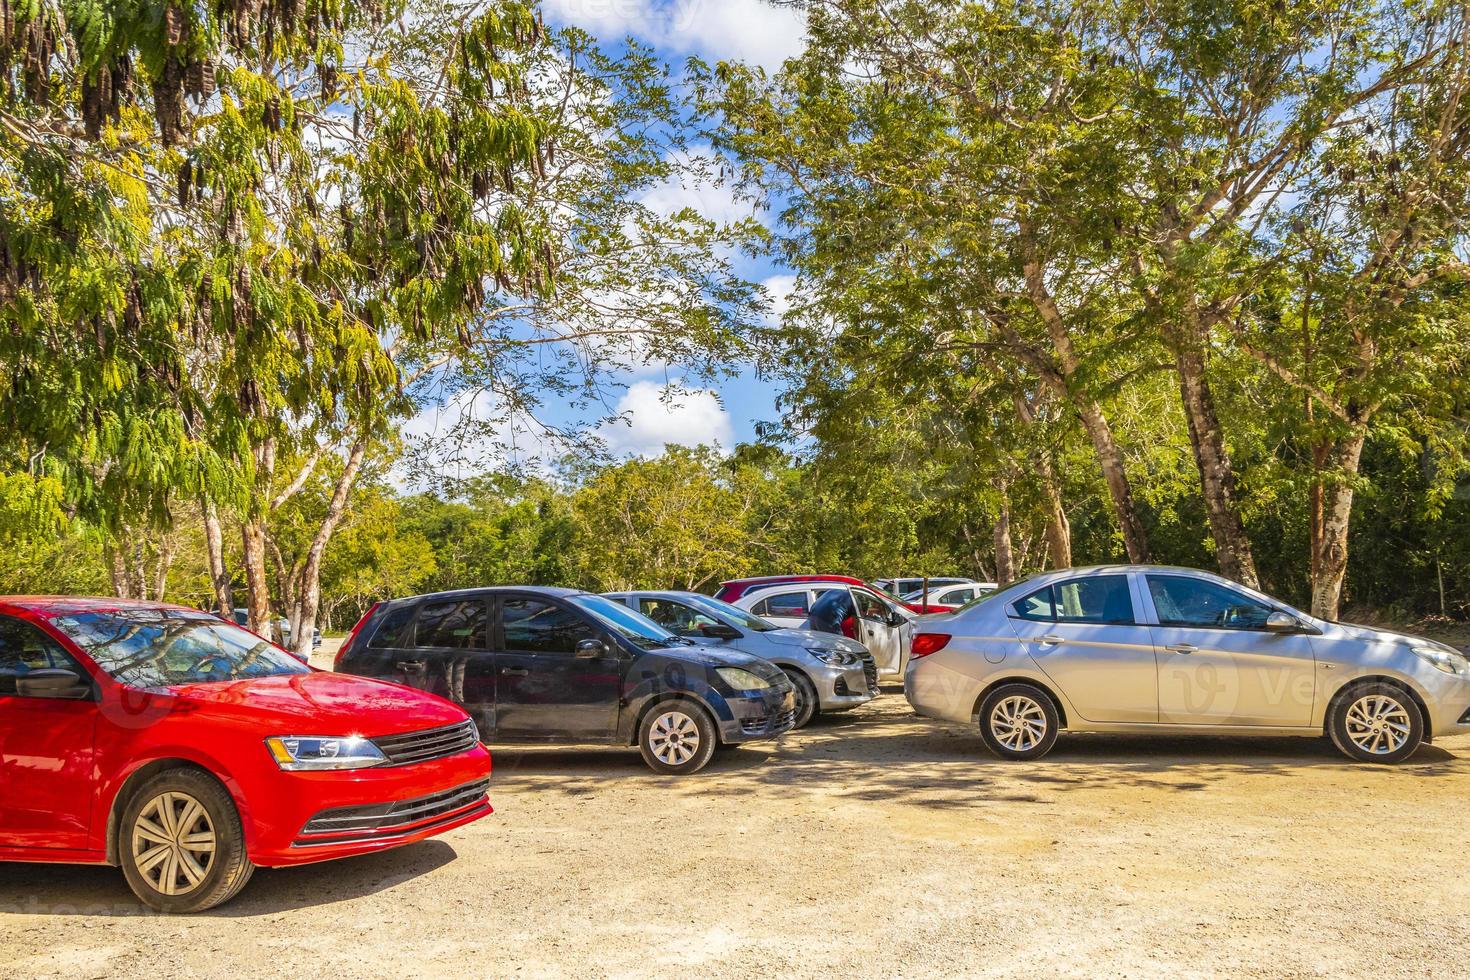 estacionamento com carros jungle para kaan luum lagoon méxico. foto